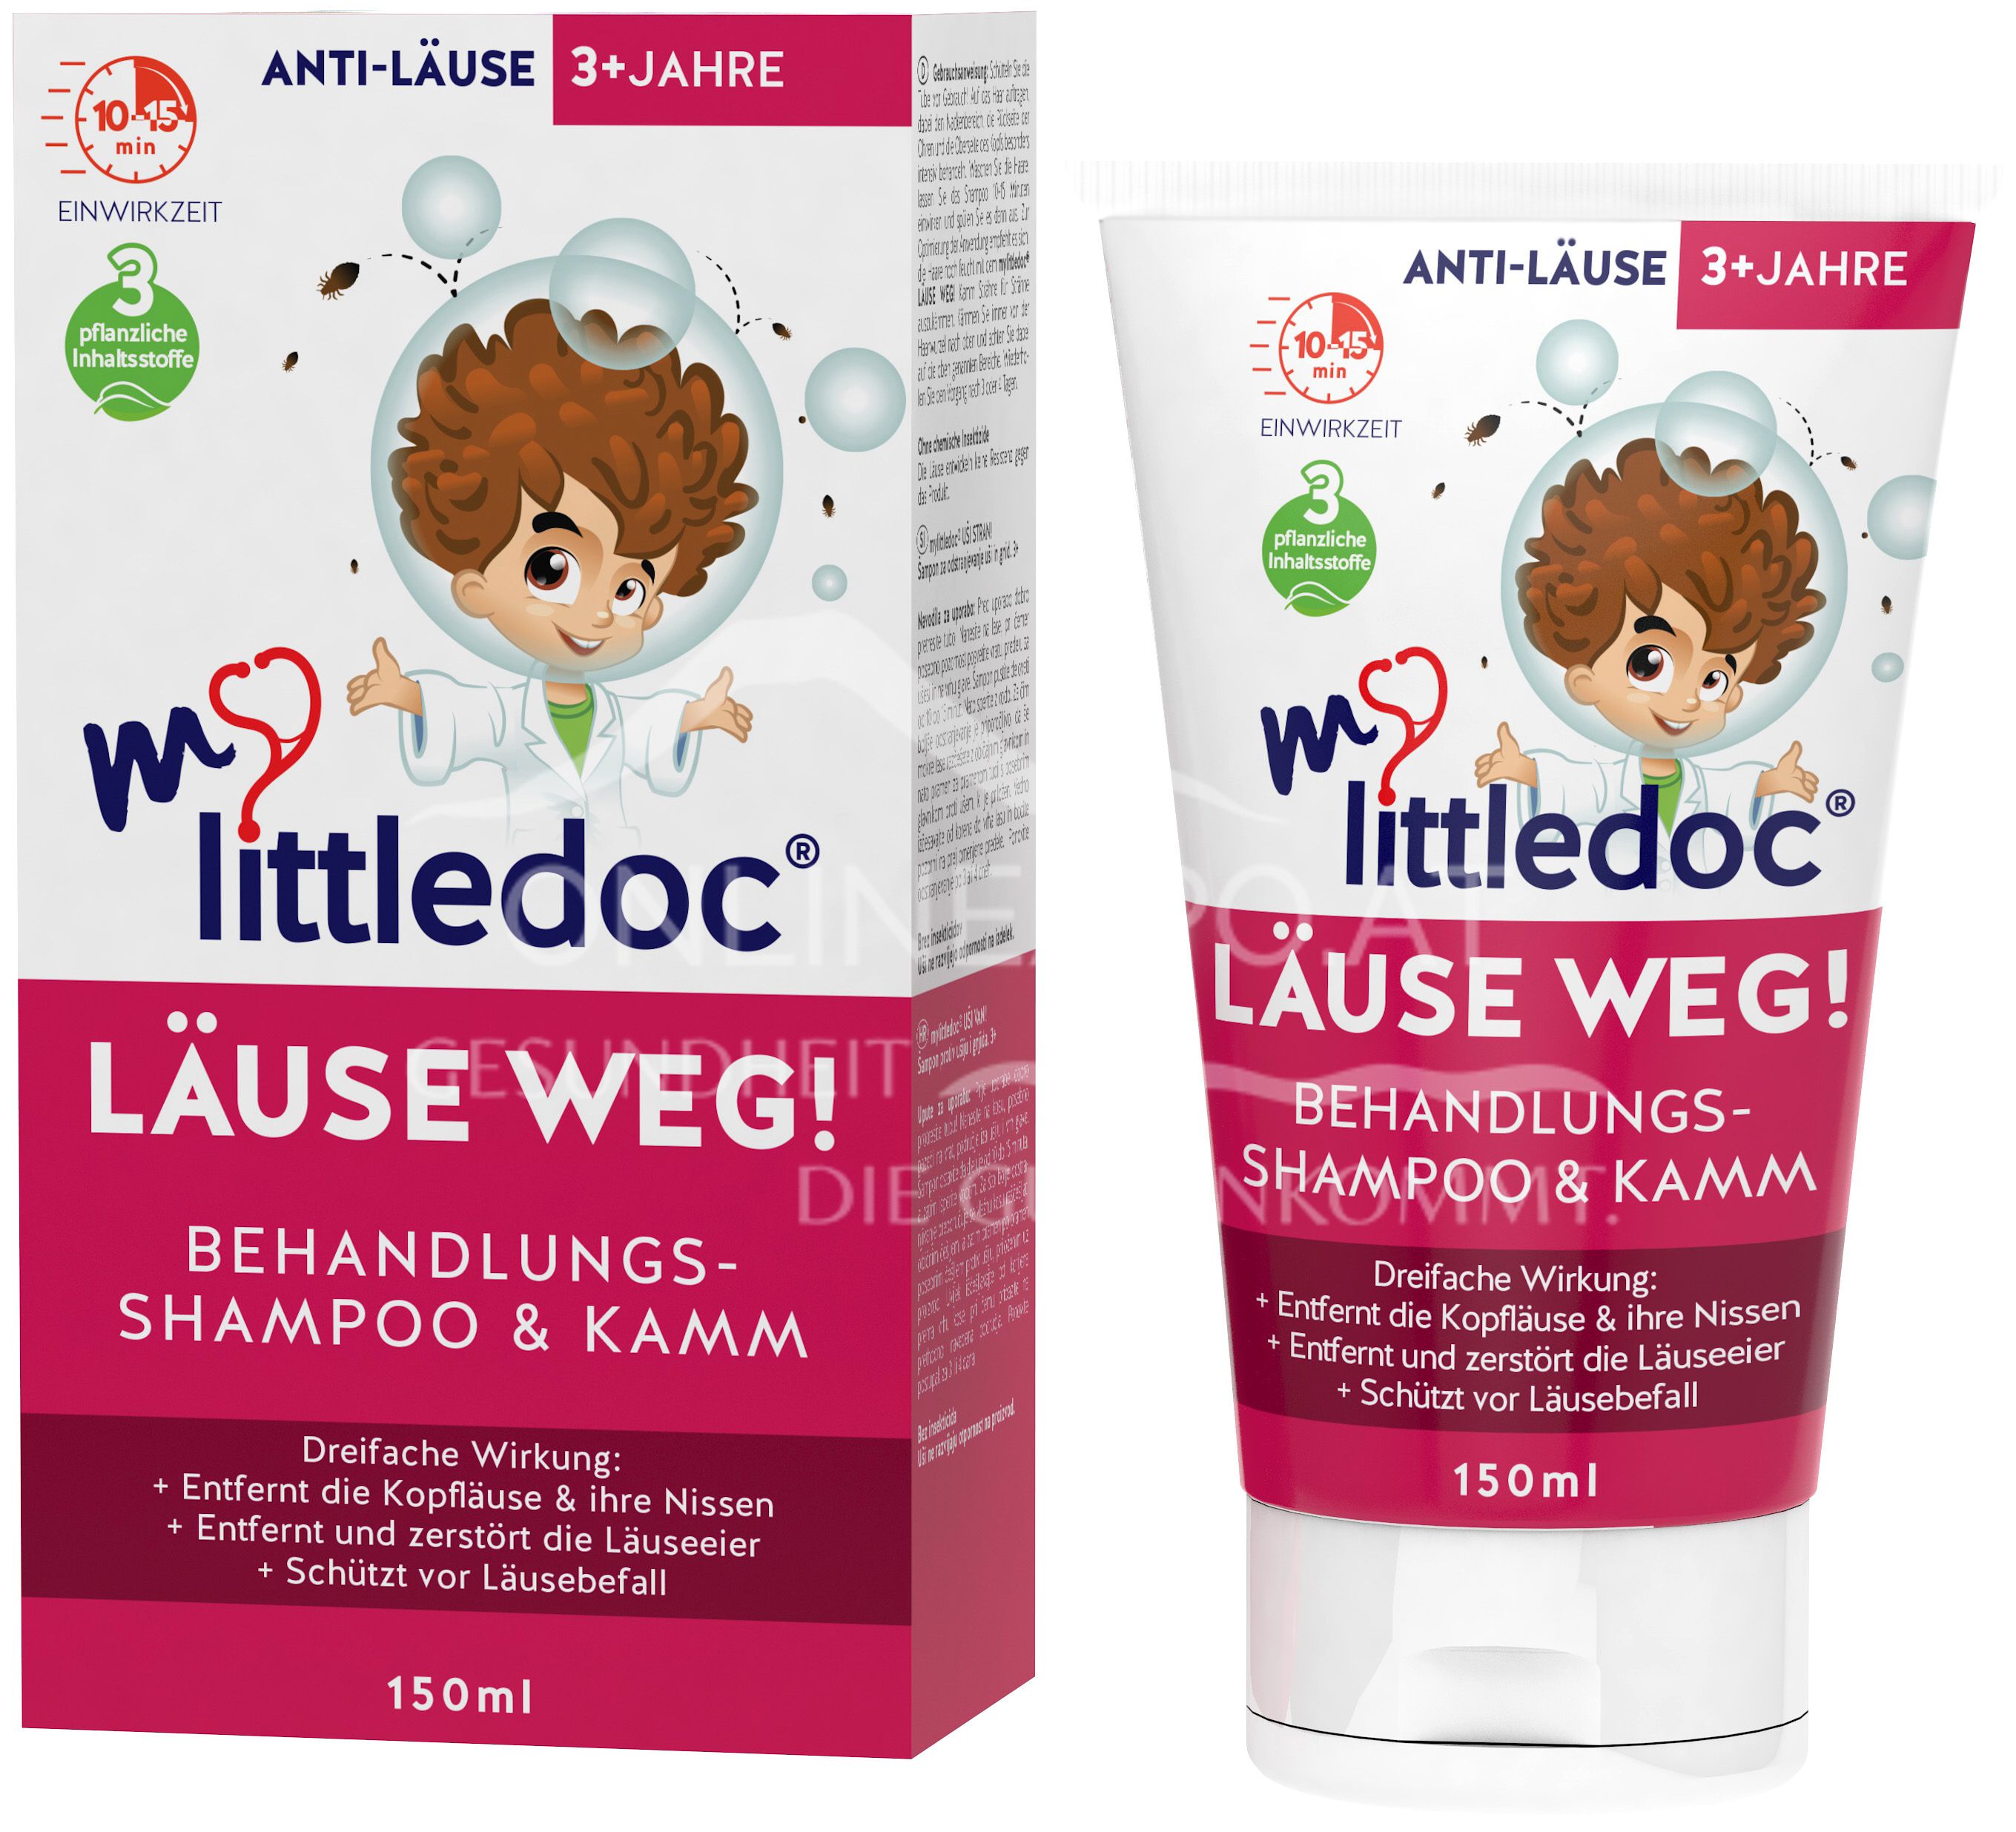 mylittledoc® LÄUSE WEG! Behandlungs-Shampoo & Kamm